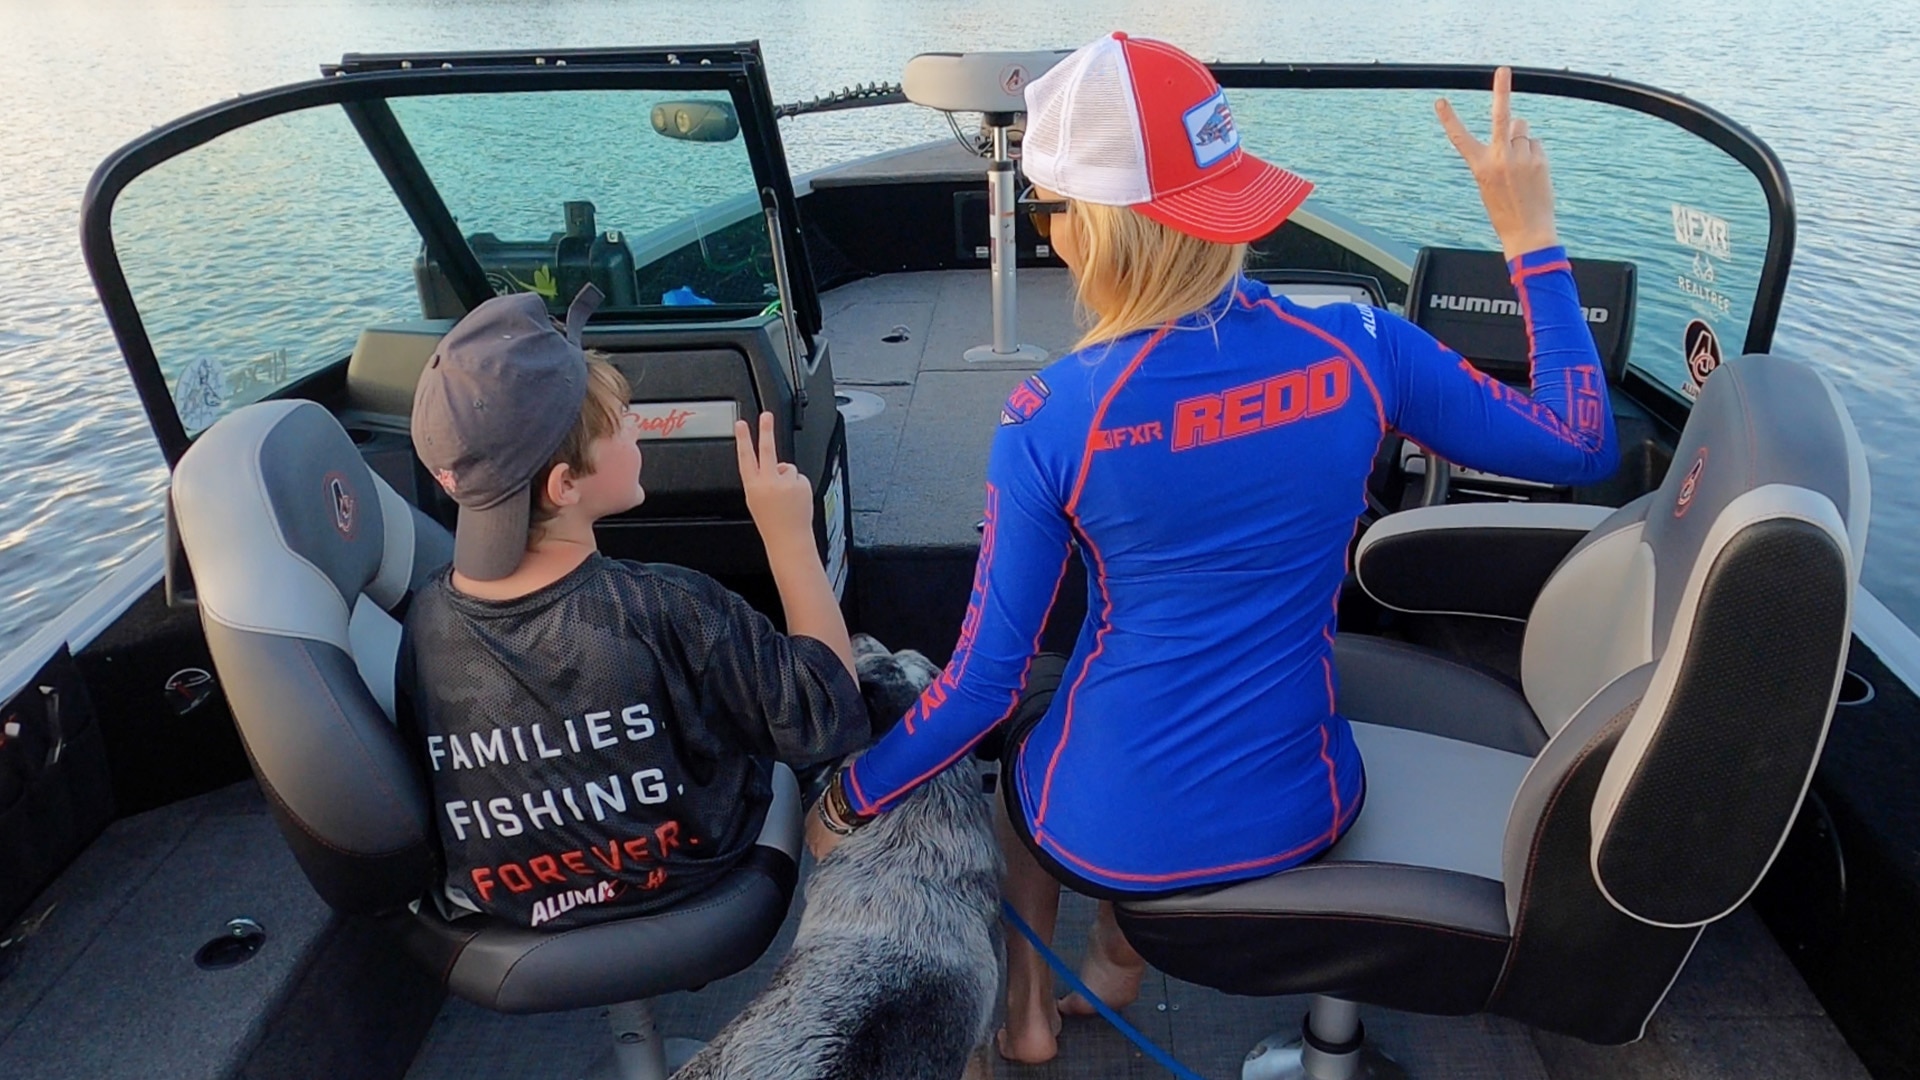 Alumacraft ambassador Rebekka Redd and her son aboard her aluminum fishing boat